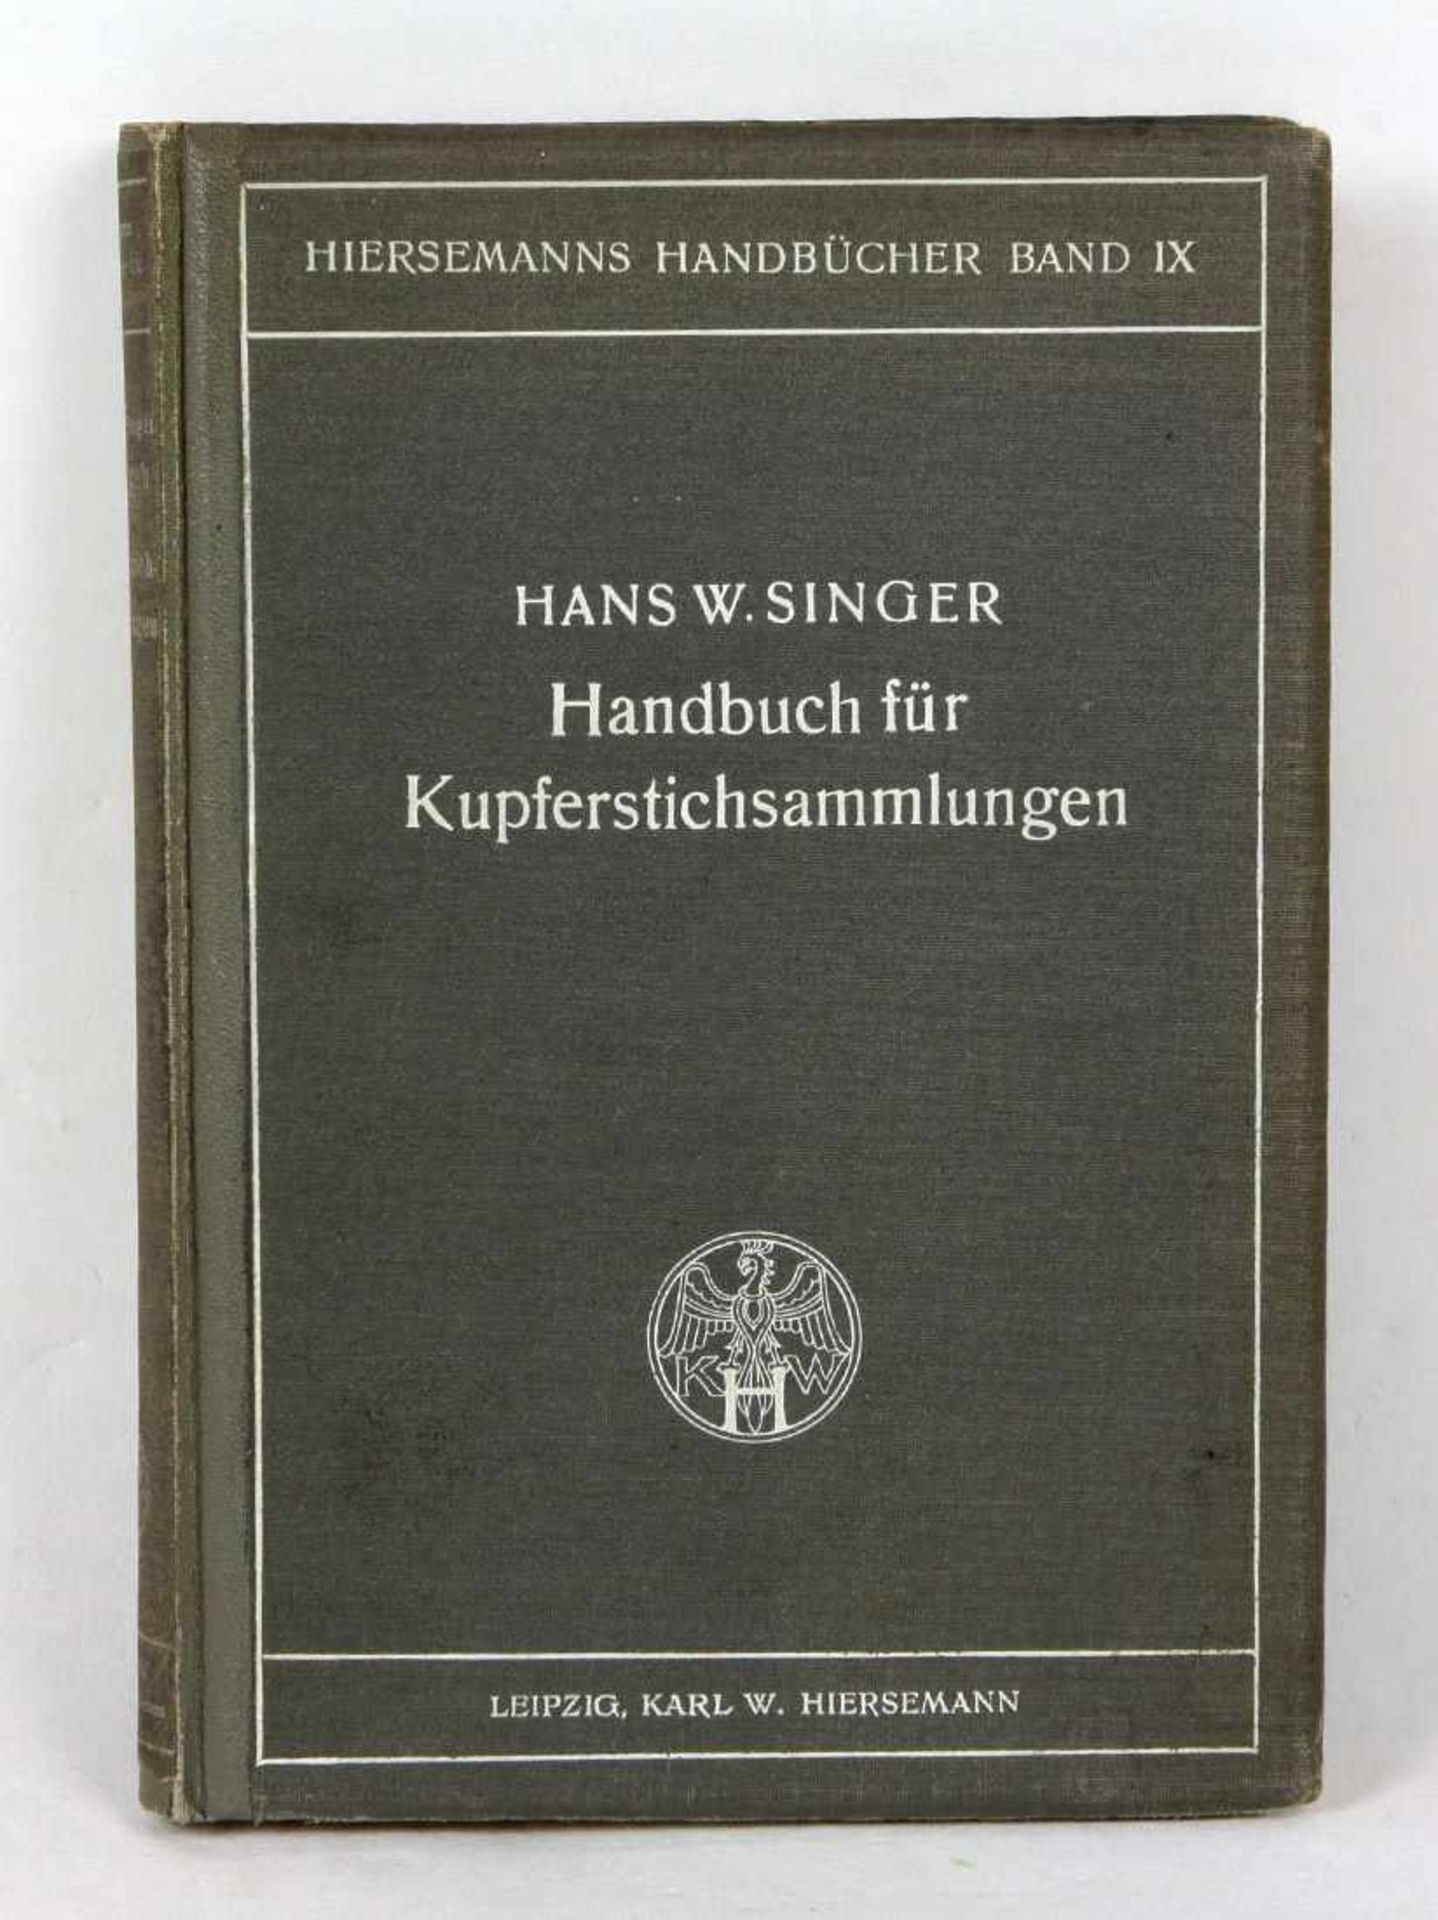 Handbuch für Kupferstichsammlungen von Hans W. Singer. Vorschläge zu deren Anlage u. Führung, mit